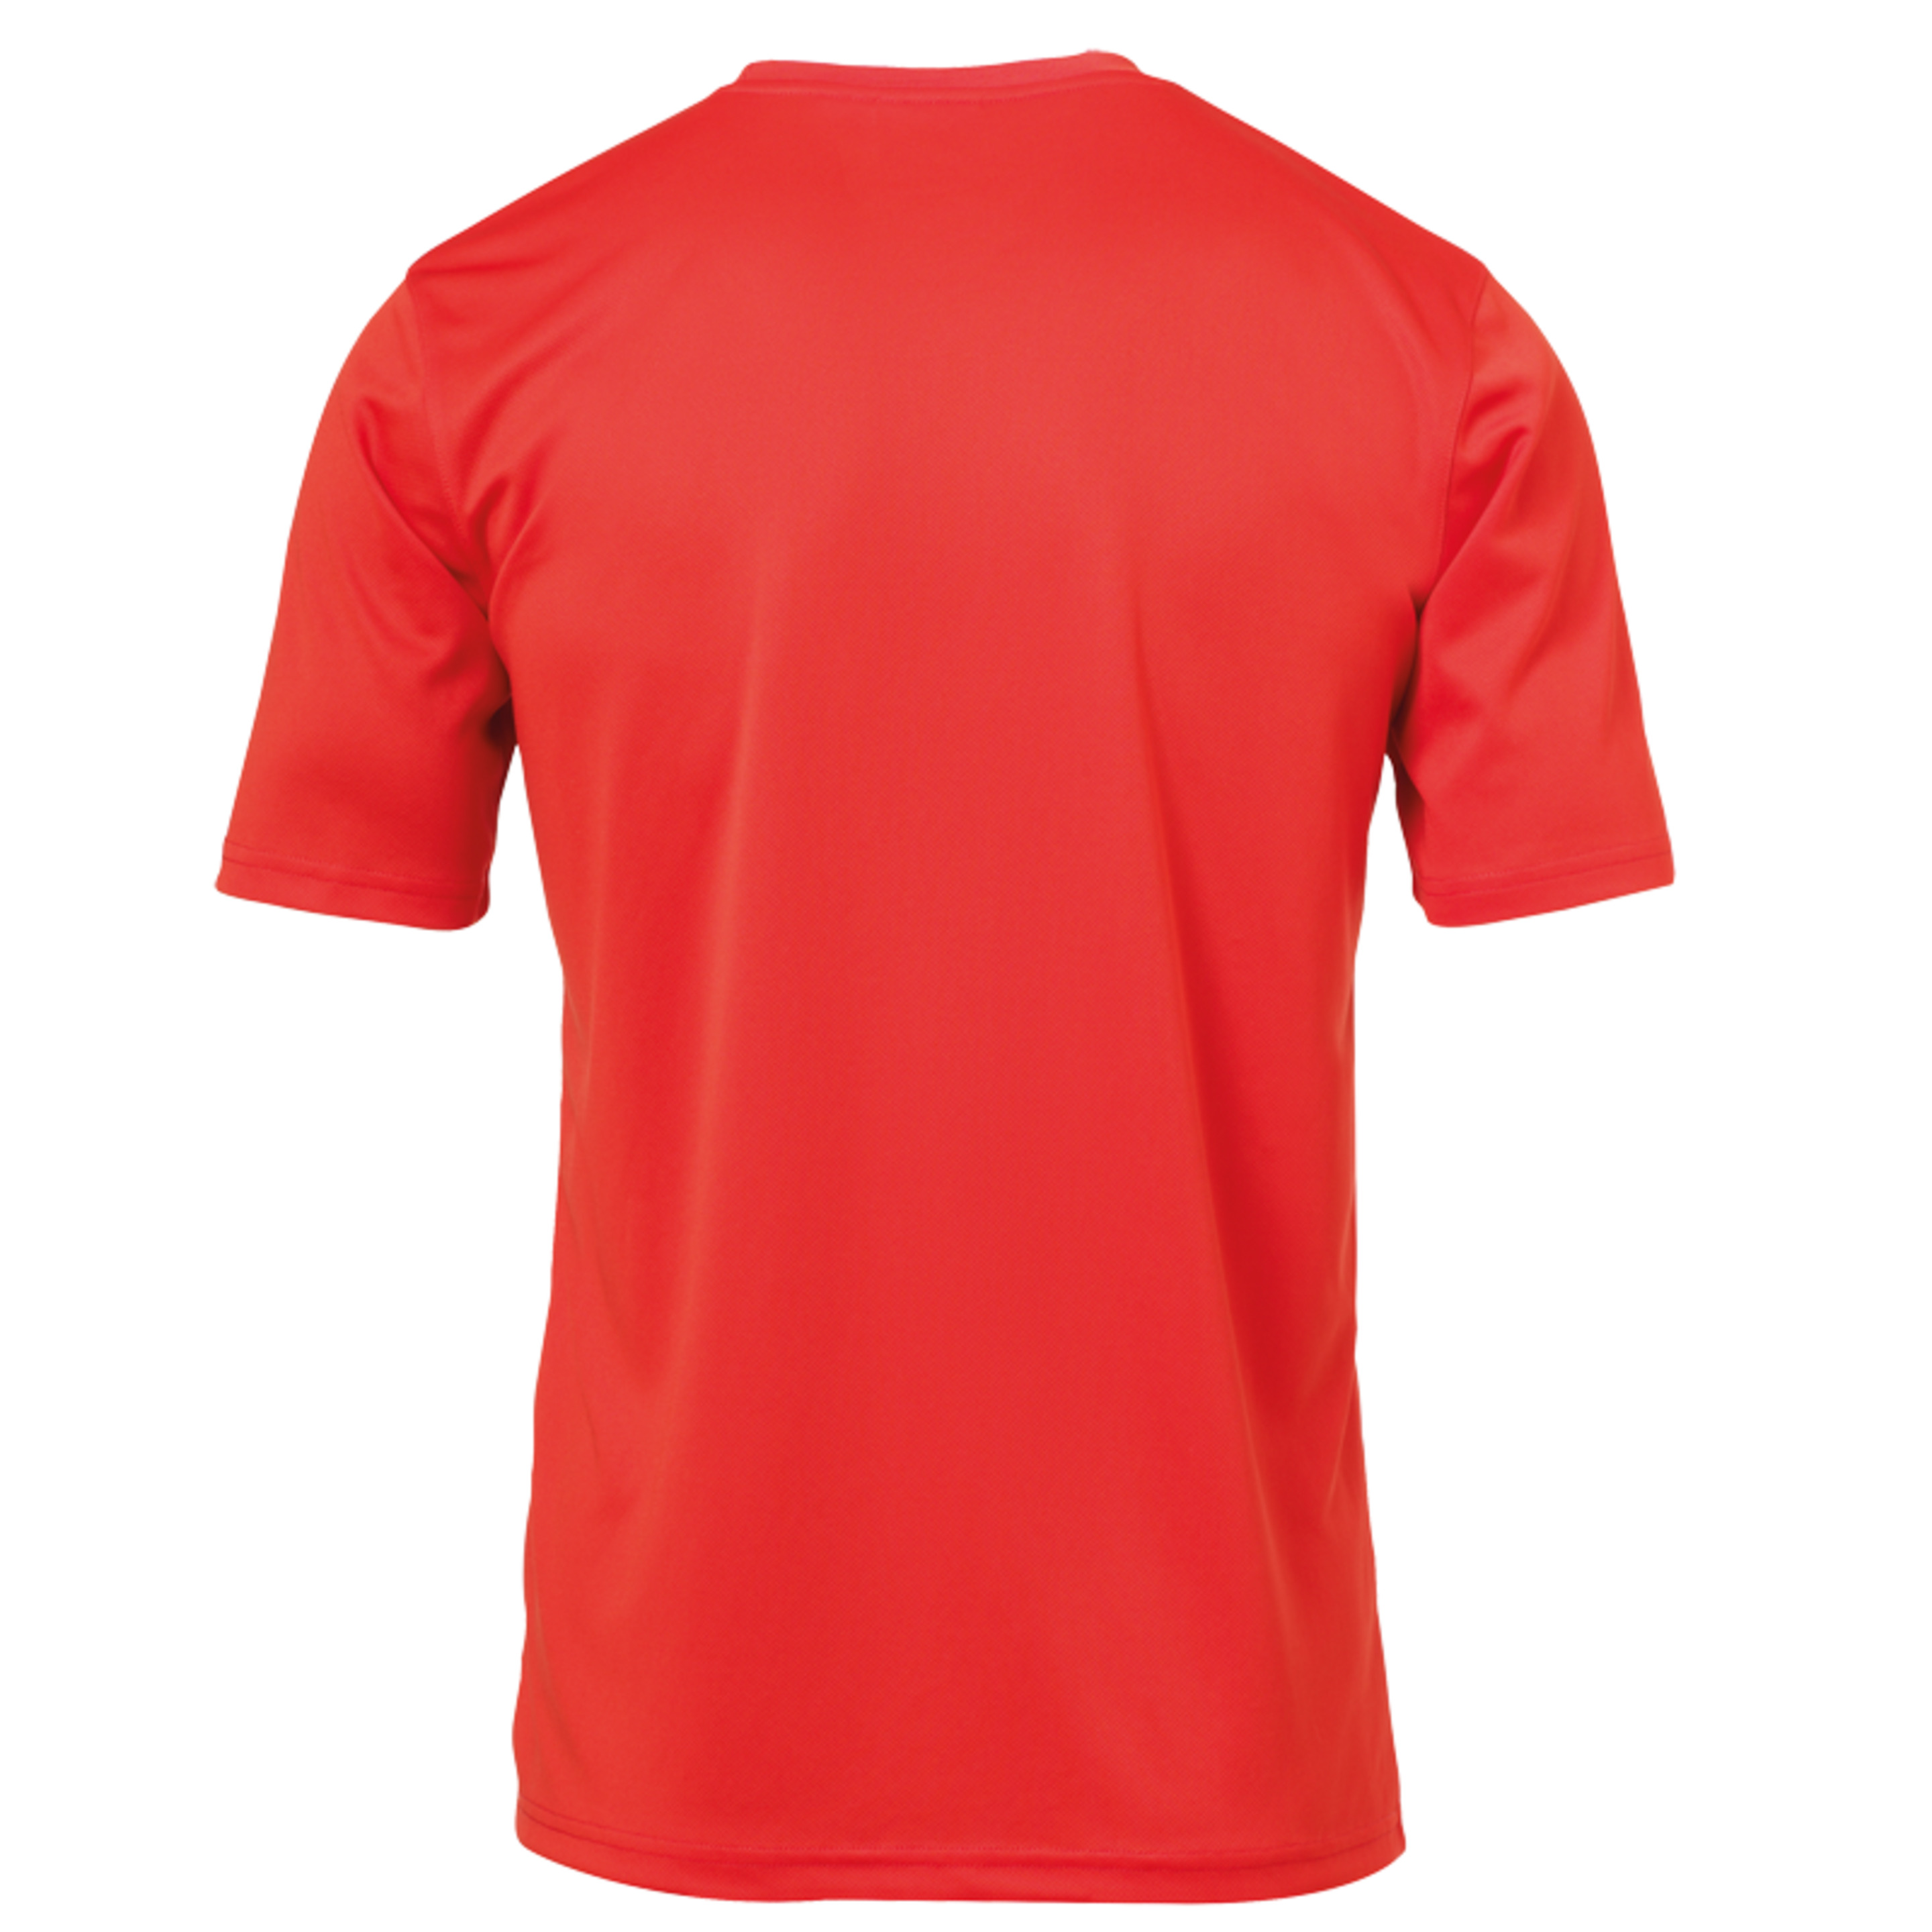 Score Training T-shirt Rojo/blanco Uhlsport